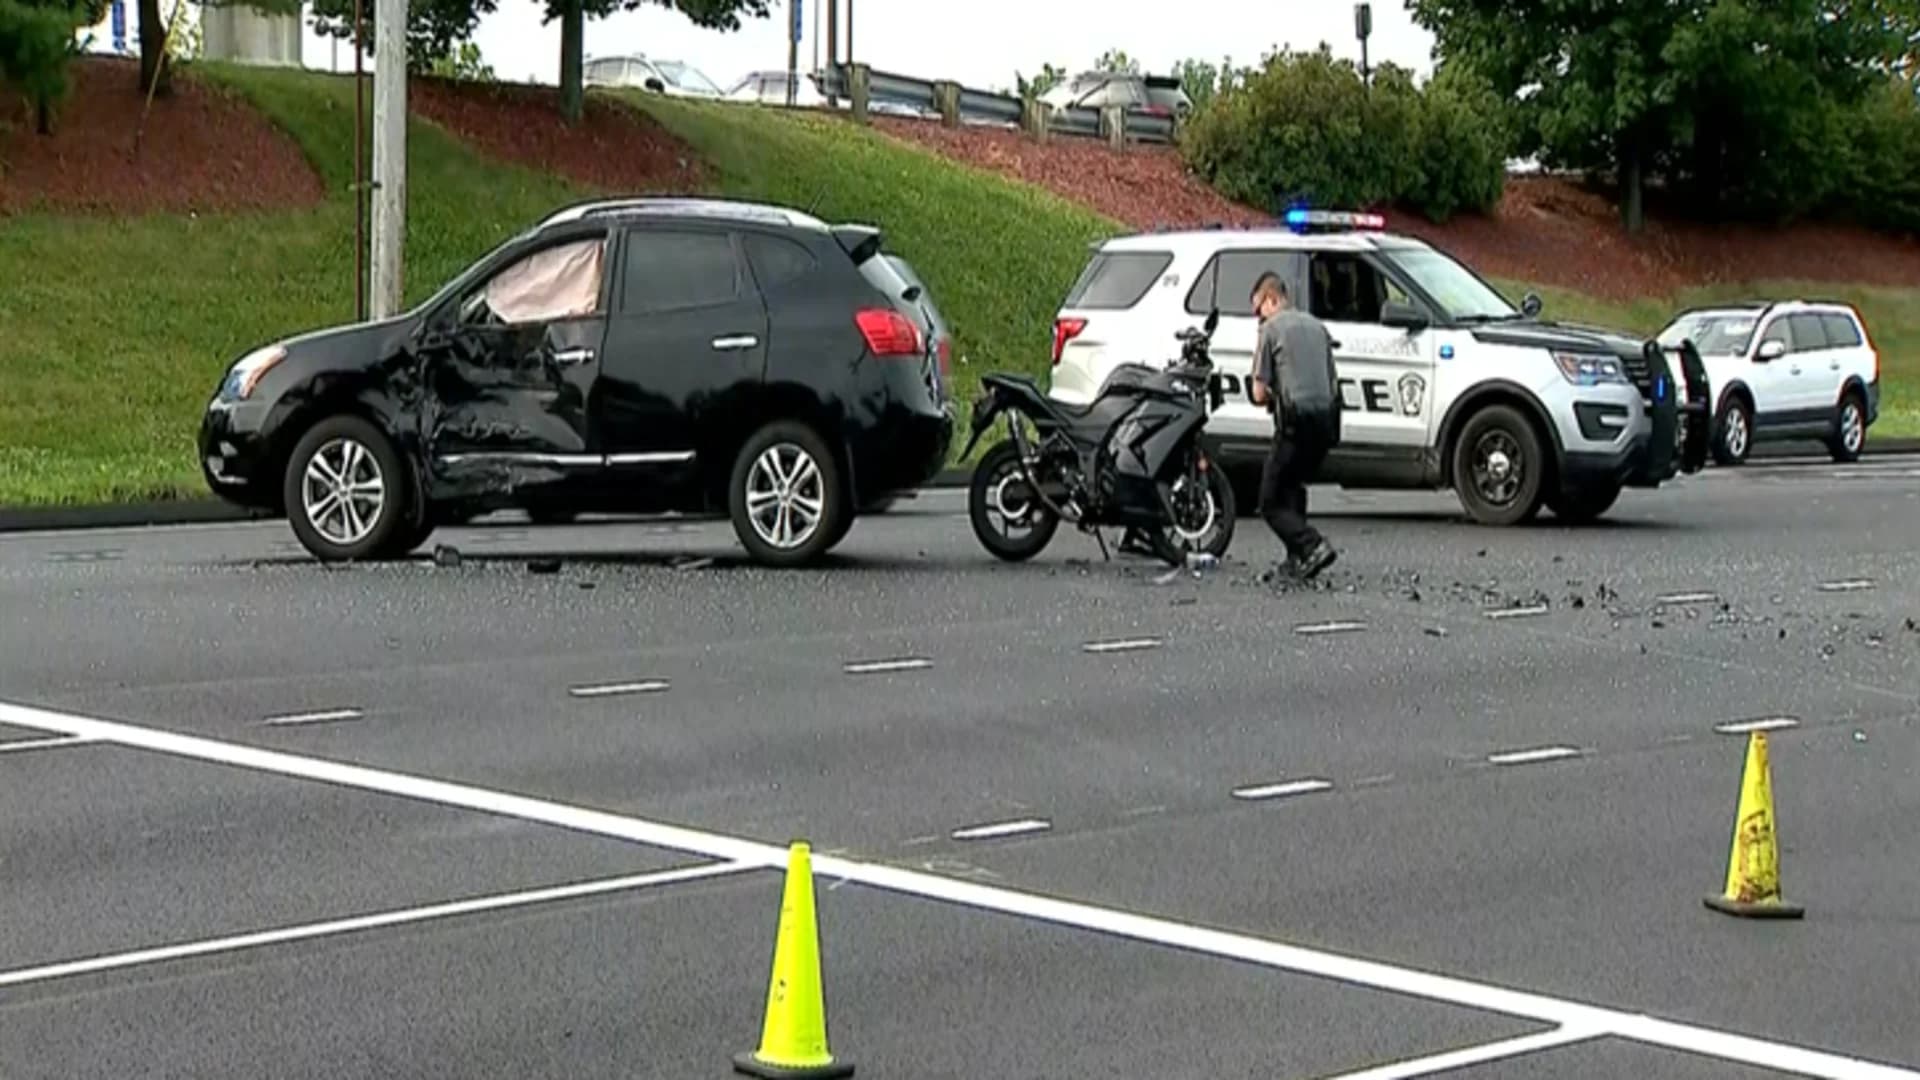 Motorcyclist seriously injured in Orange crash